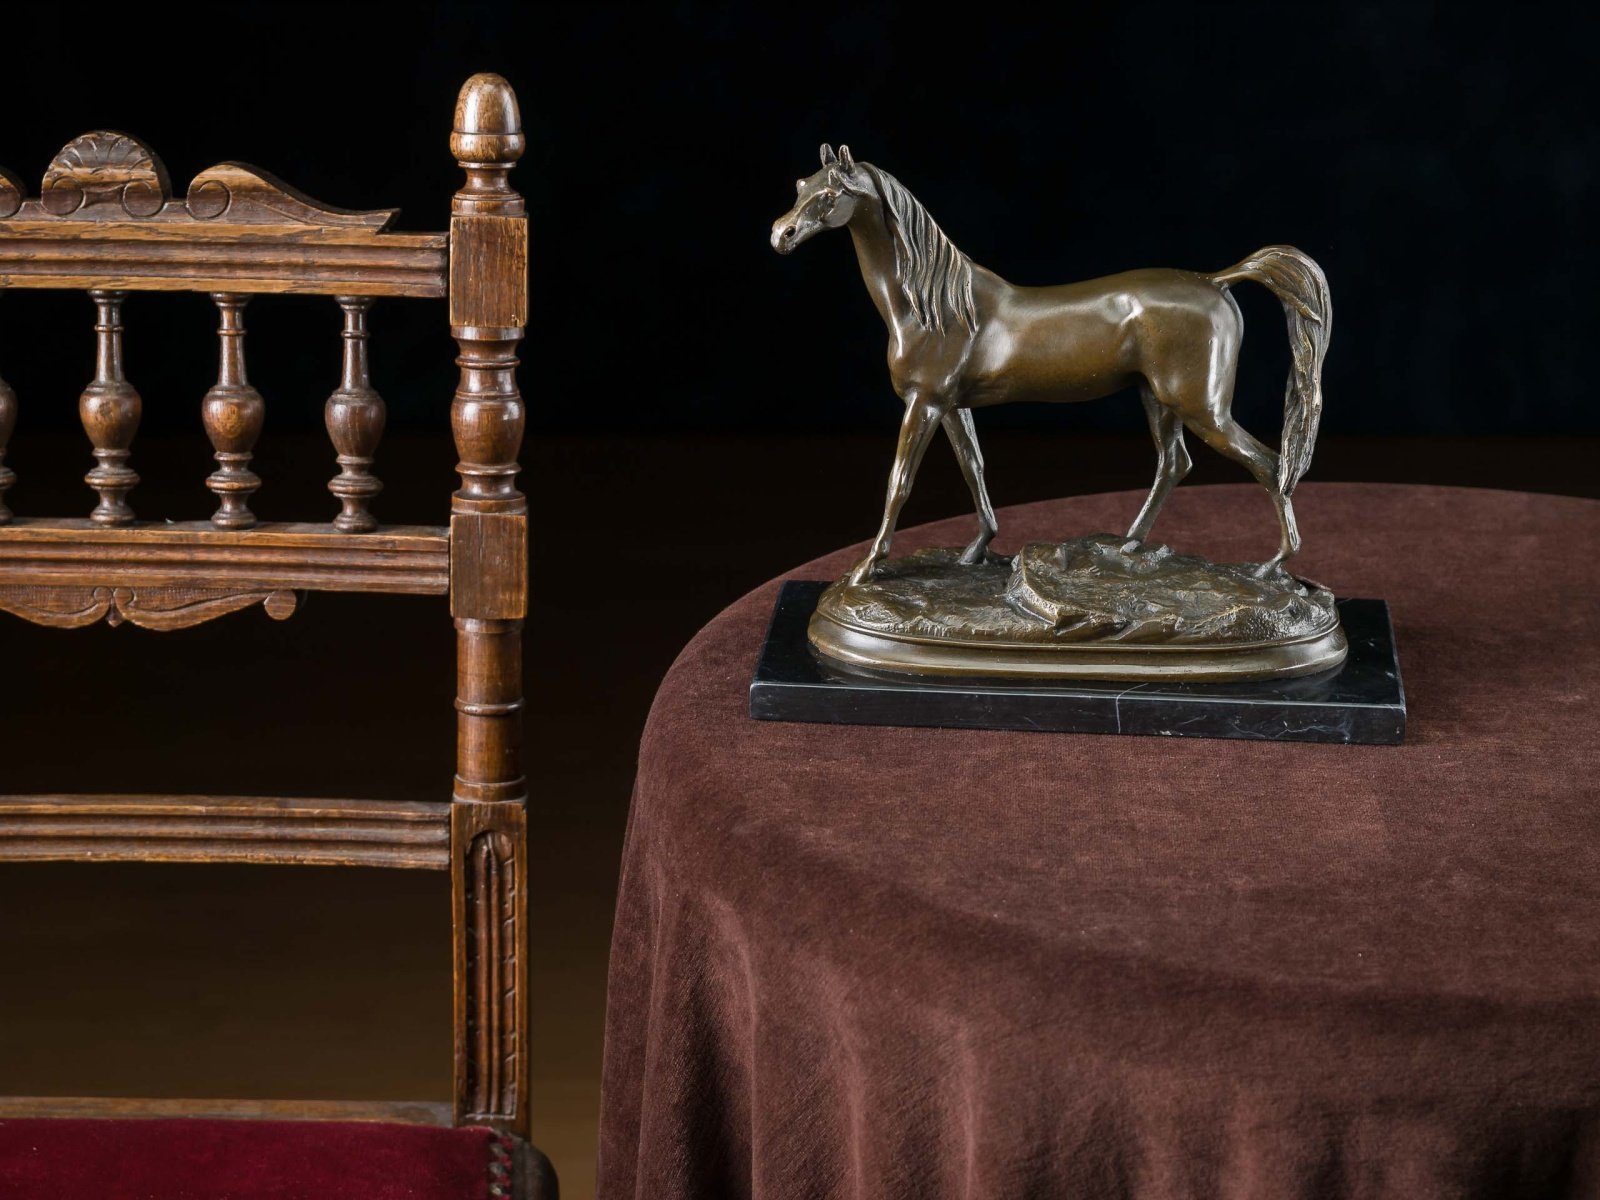 Aubaho Figur Pferd Bronze Bronzeskulptur Araber Bronzefigur Skulptur Skulptur Antik-St